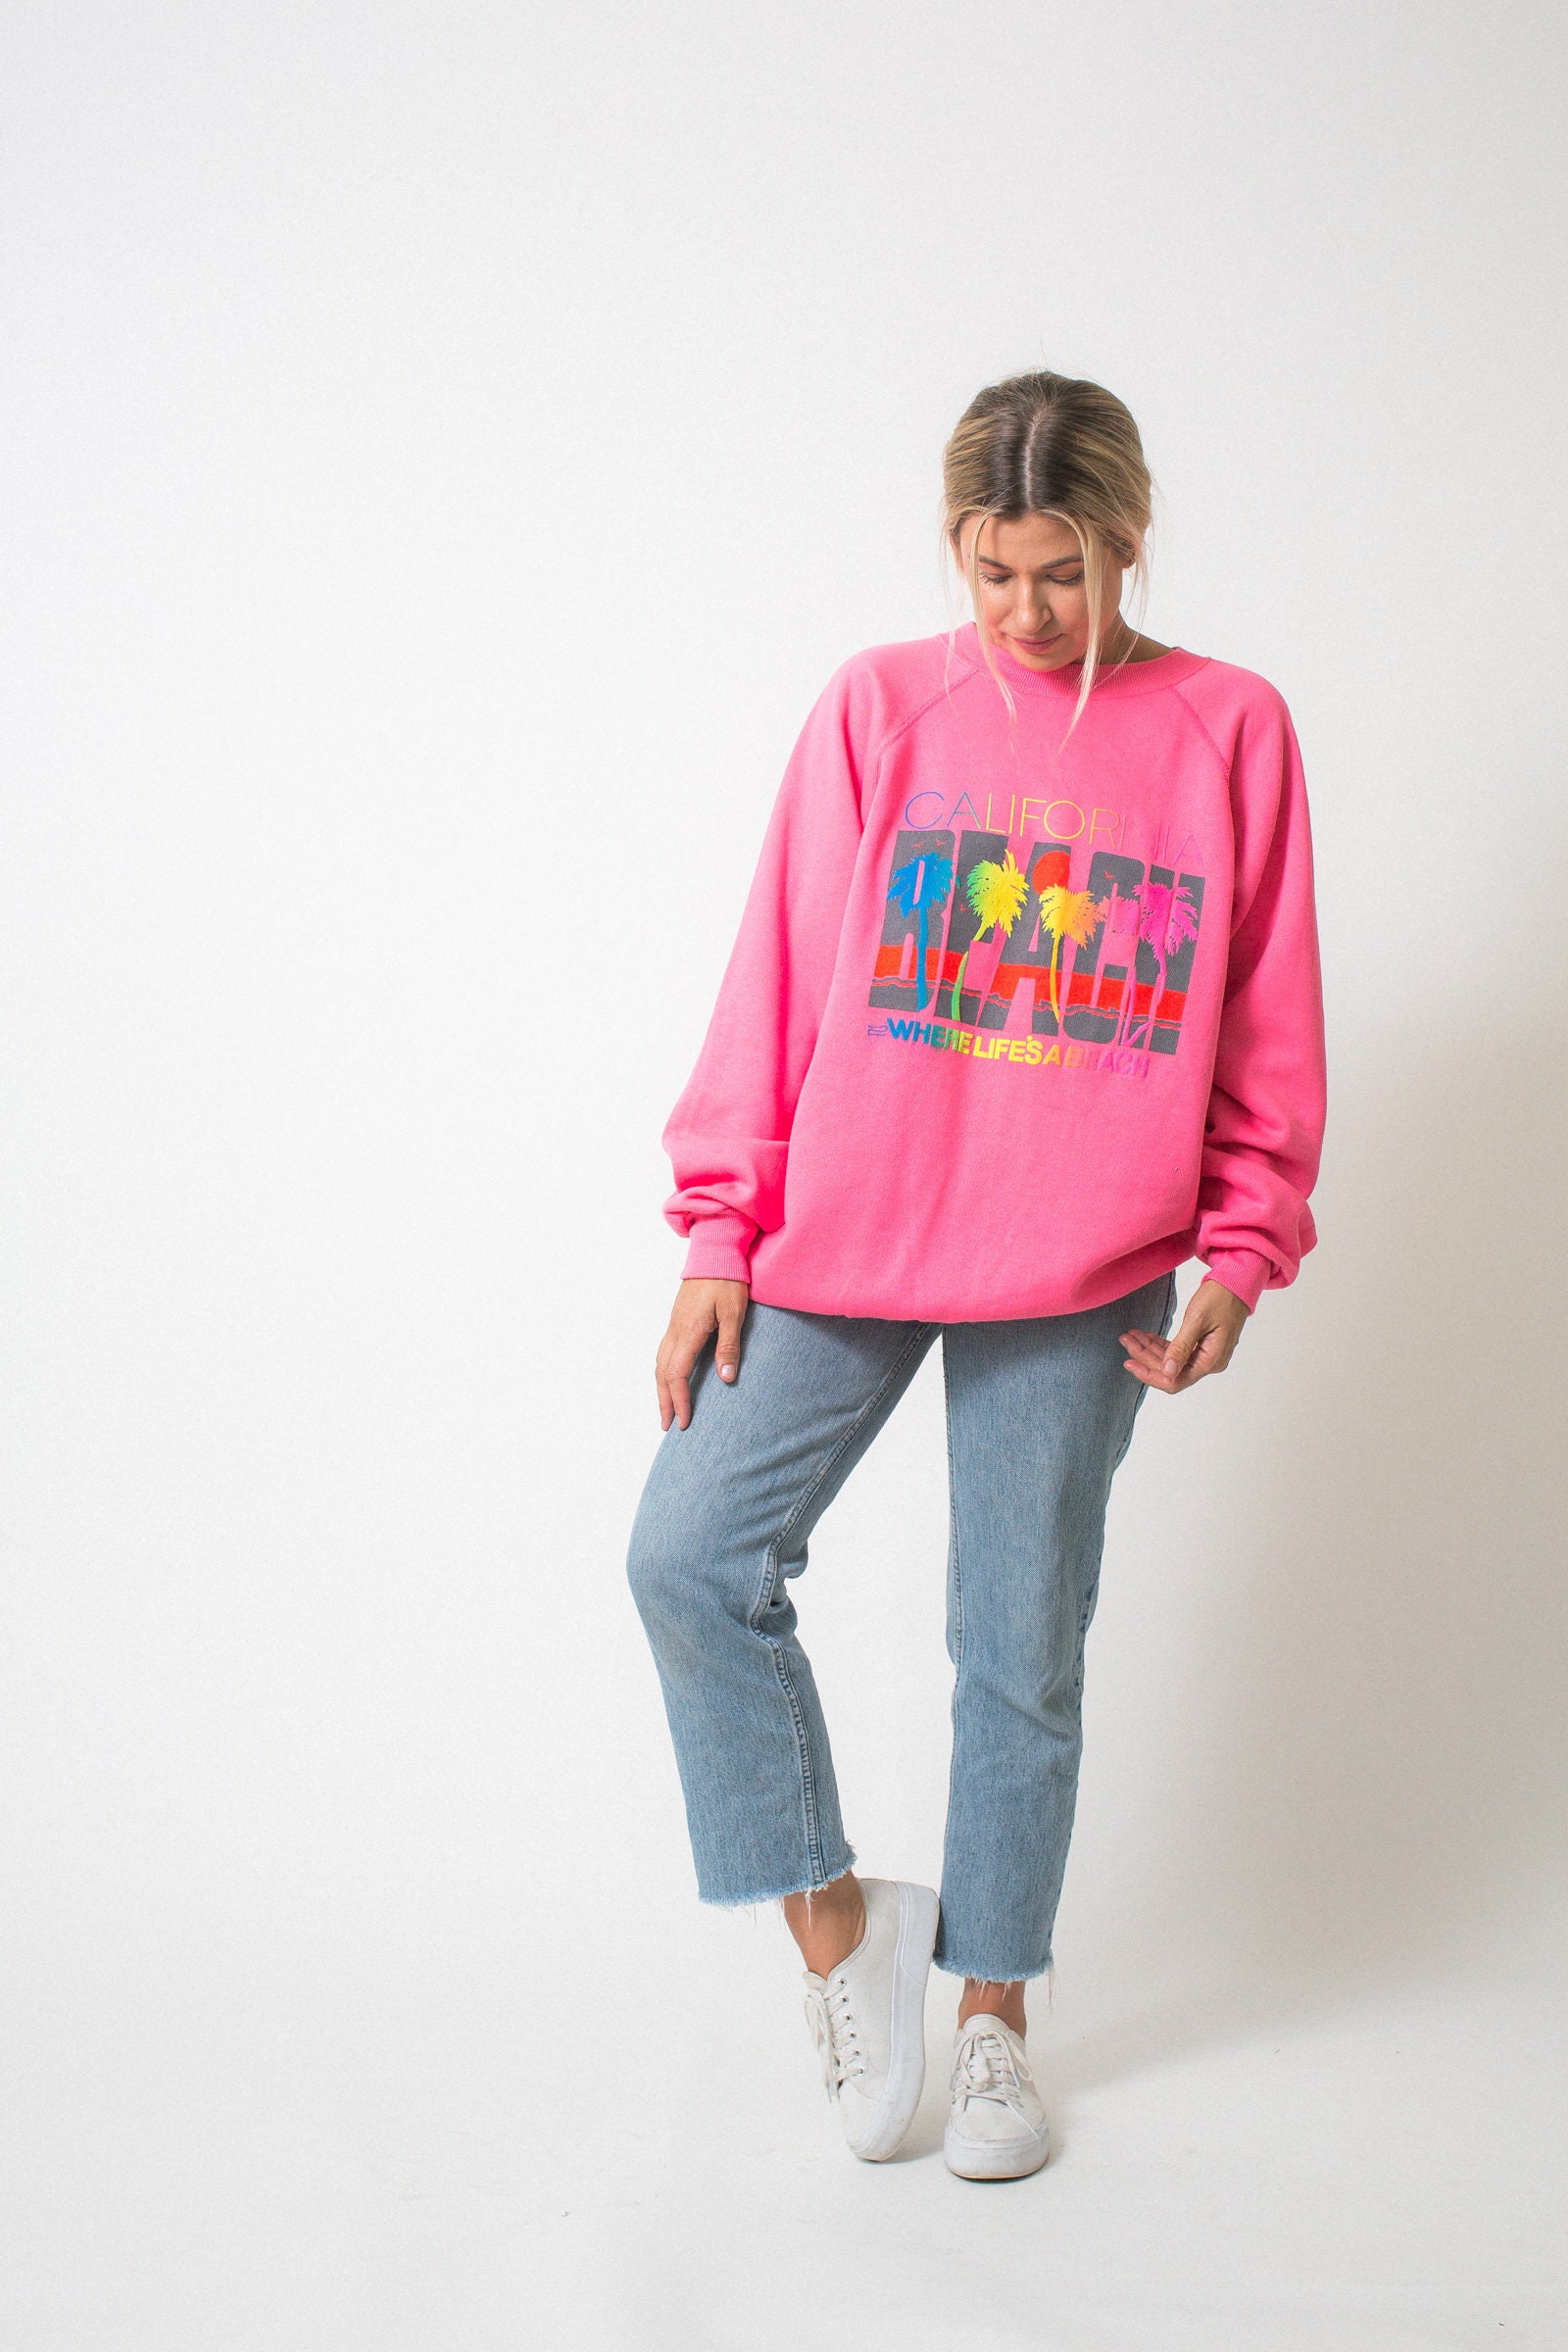 CALIFORNIA sweatshirt vintage RAGLAN sweatshirt hot pink NEON | Etsy